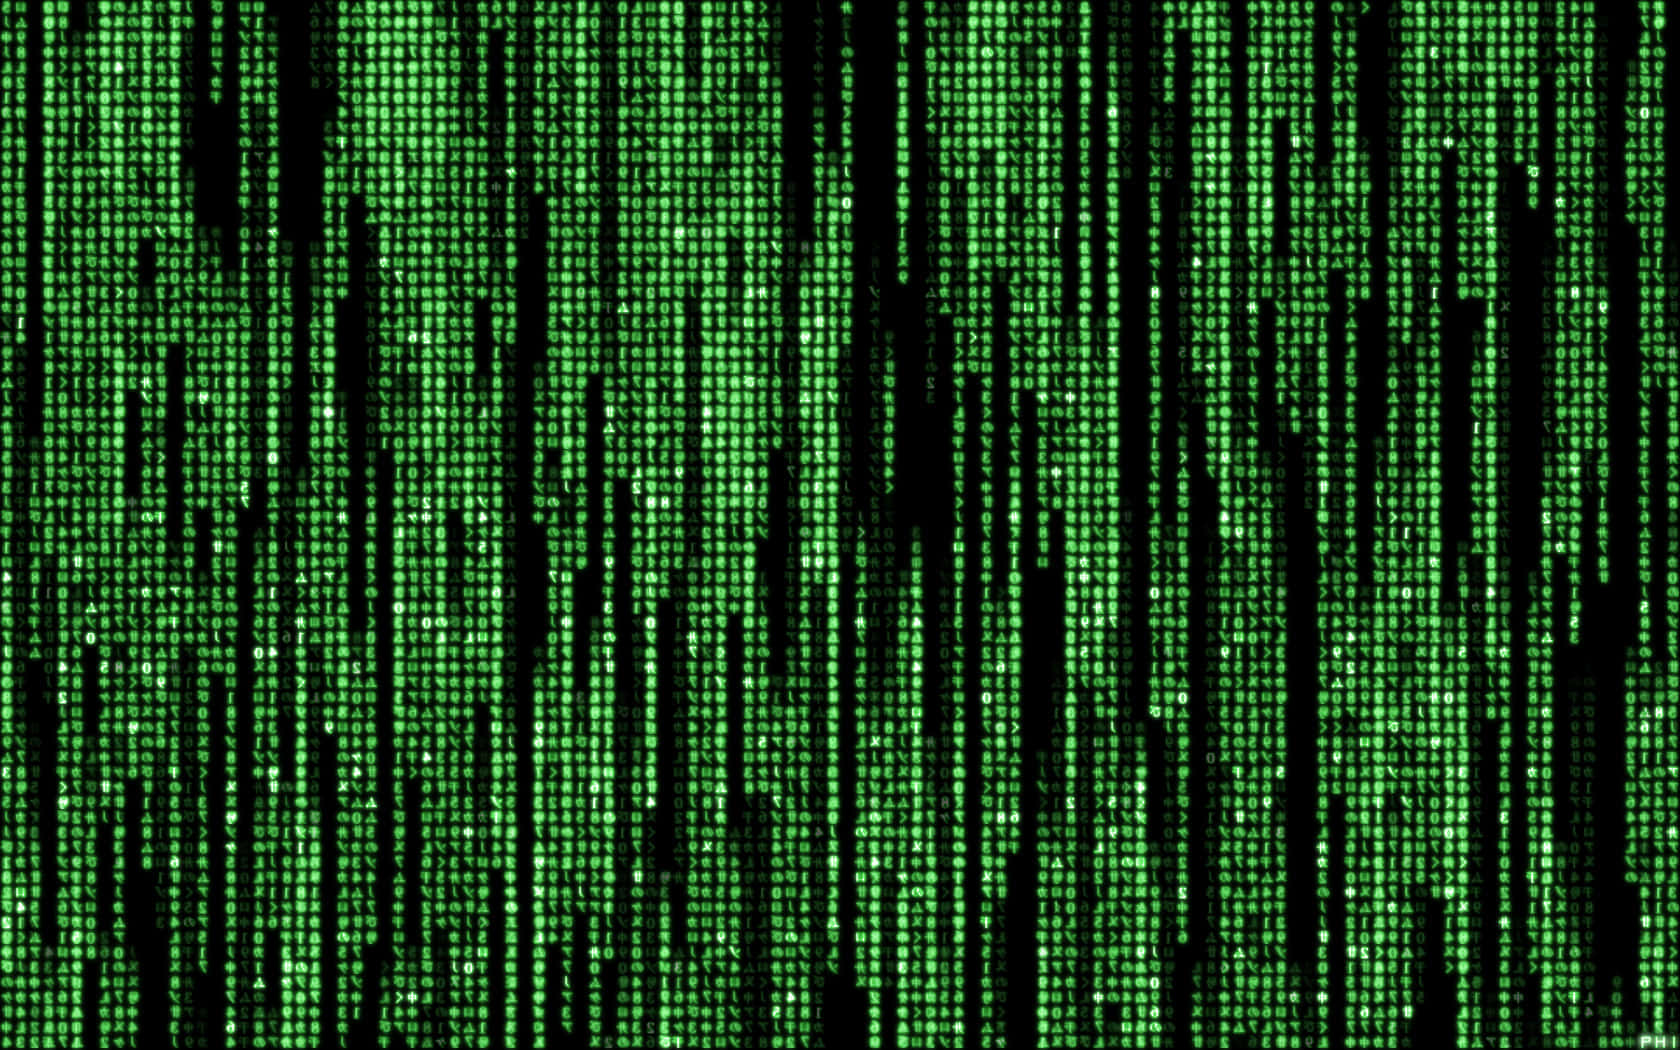 Take a journey into the Matrix Wallpaper